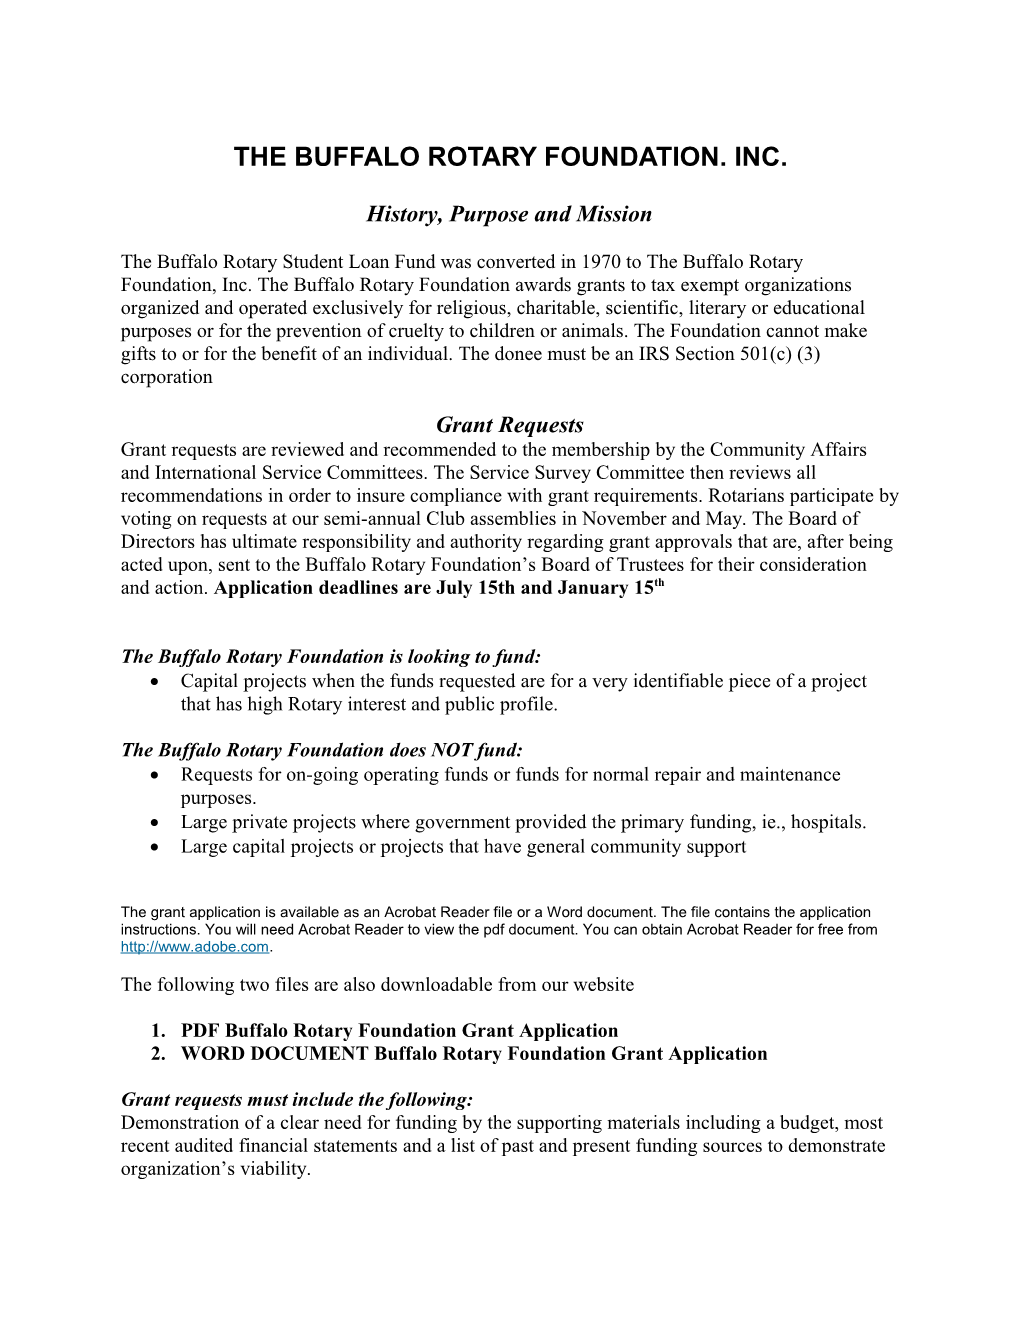 The Buffalo Rotary Foundation, Inc